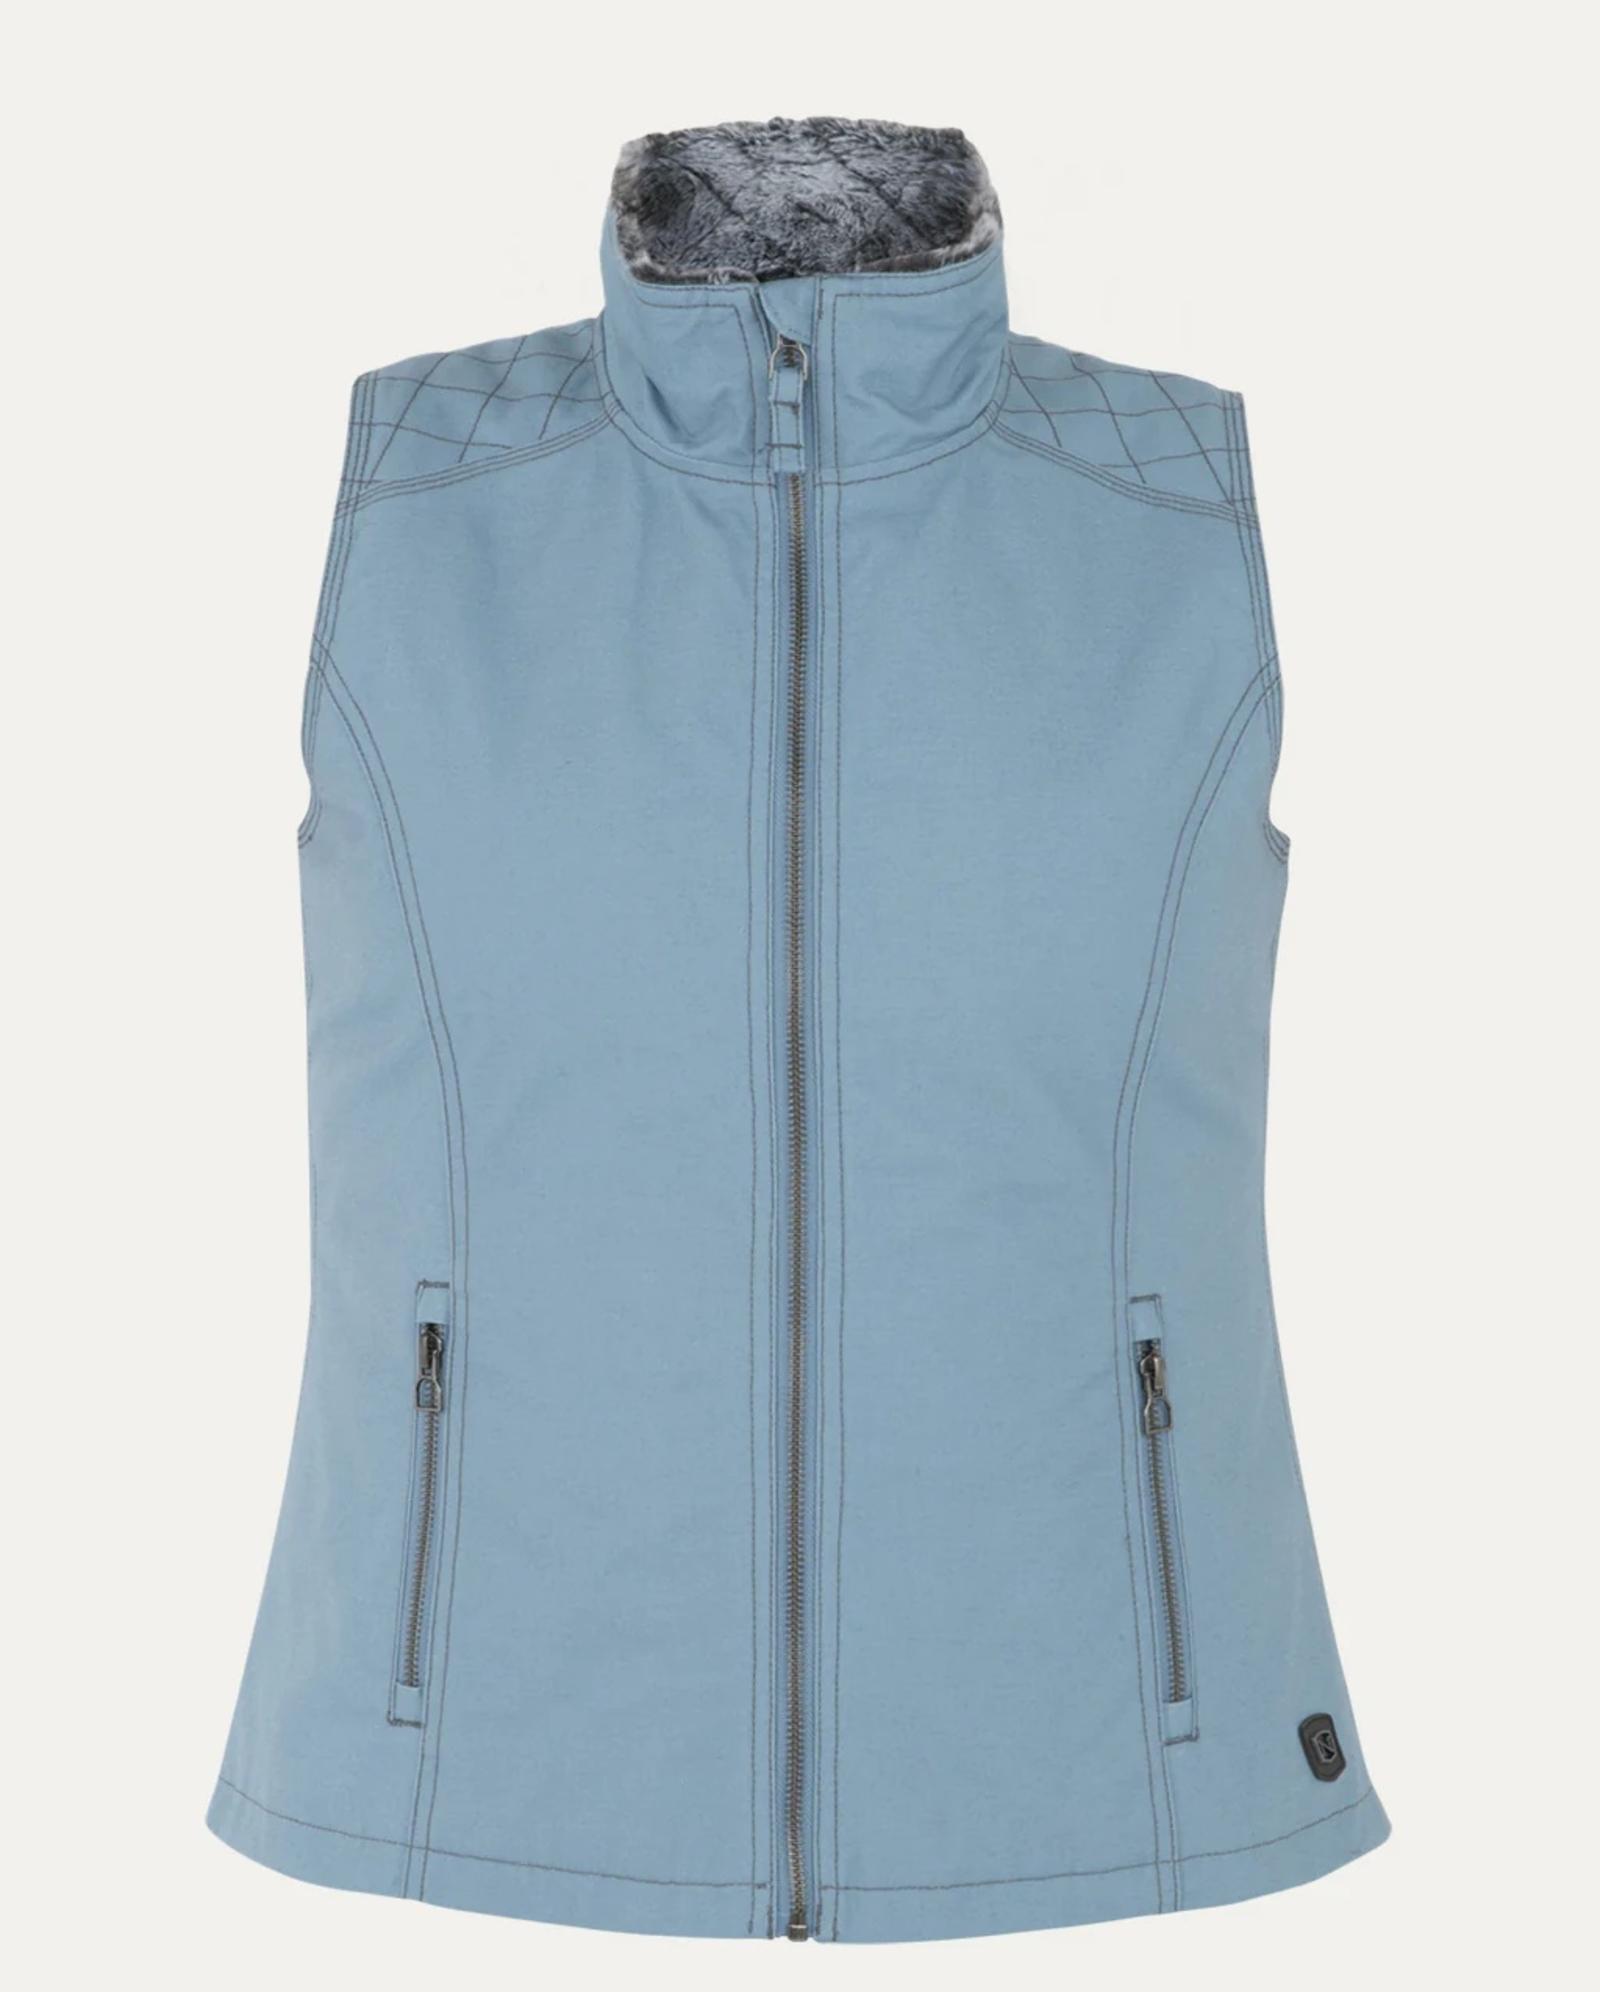 Noble Outfitters Women's Canvas Vest dusty blue Front View